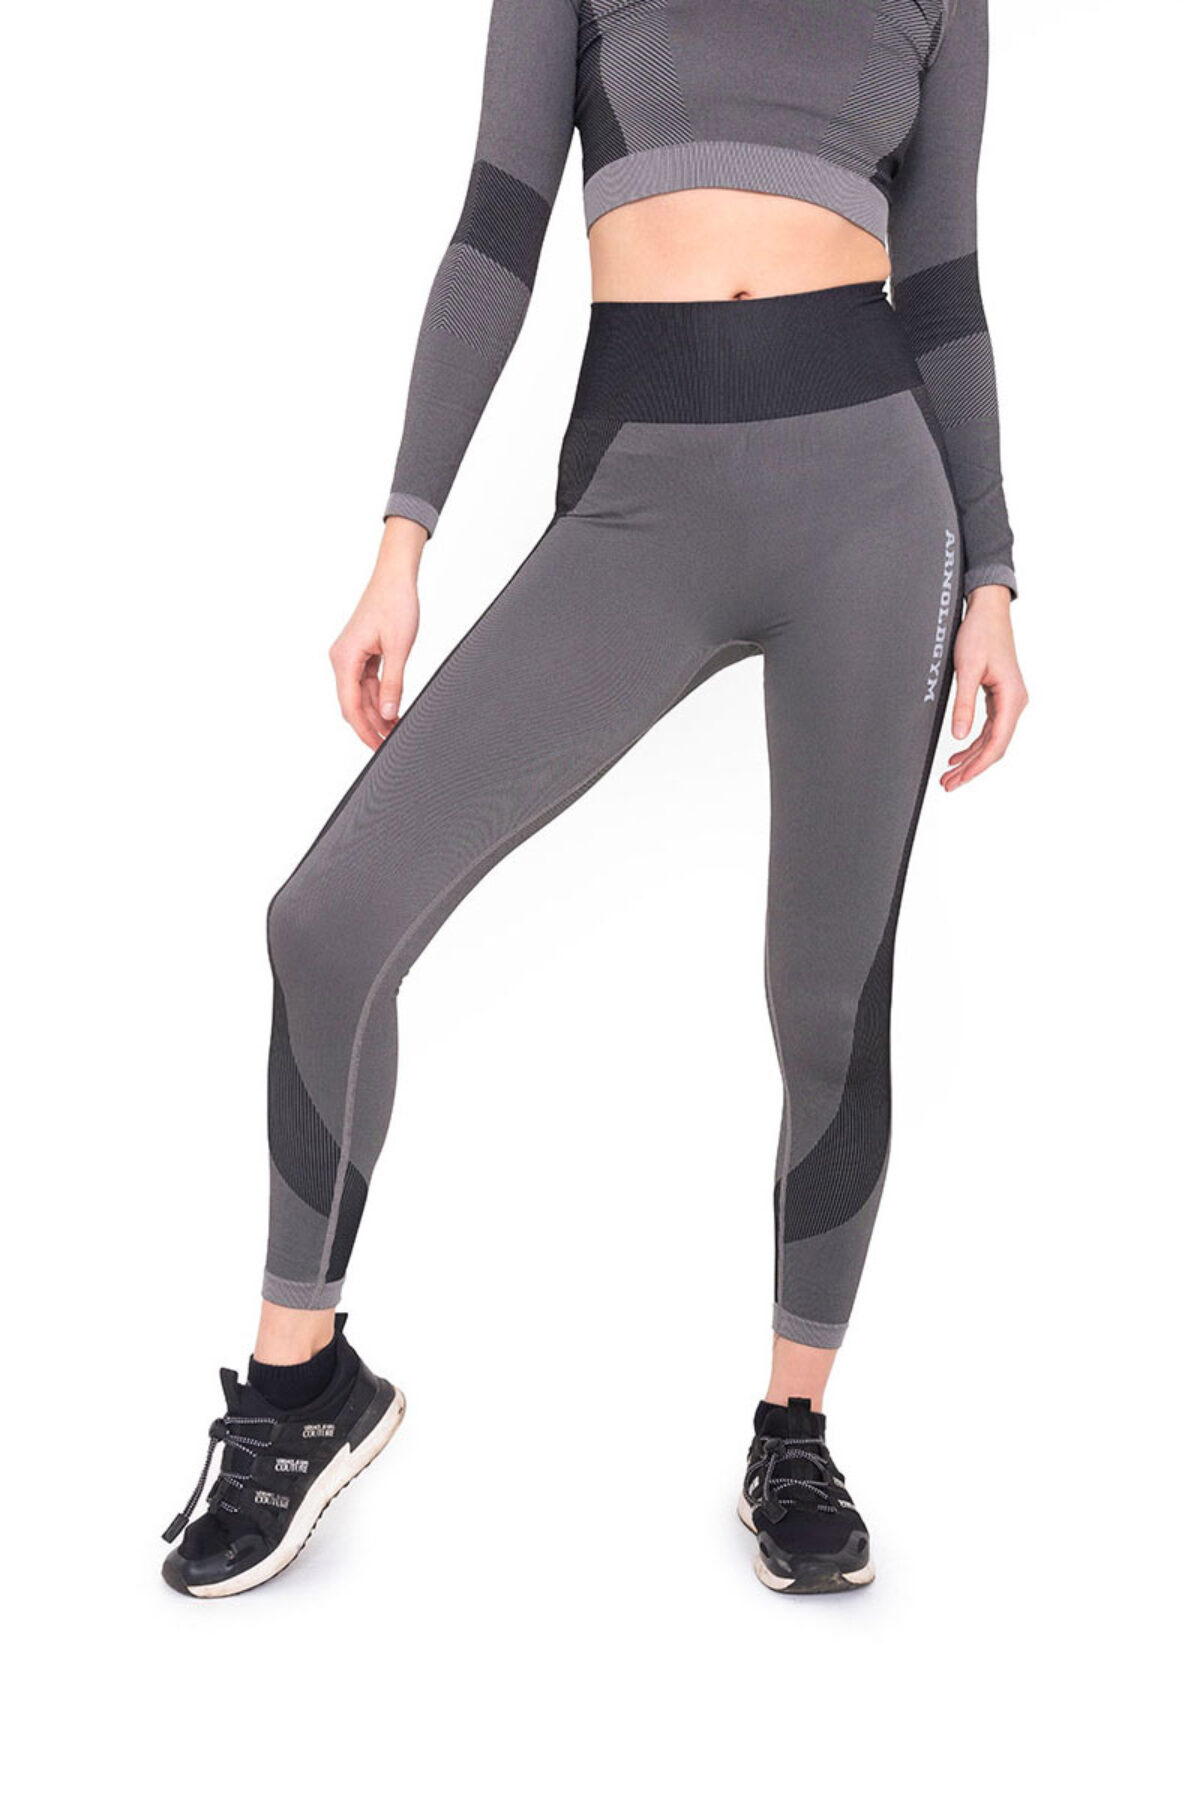 https://www.arnoldgymgear.com/wp-content/uploads/2020/10/women-gym-leggings-fitness-leggings-arnold-gym-1200x1800.jpg